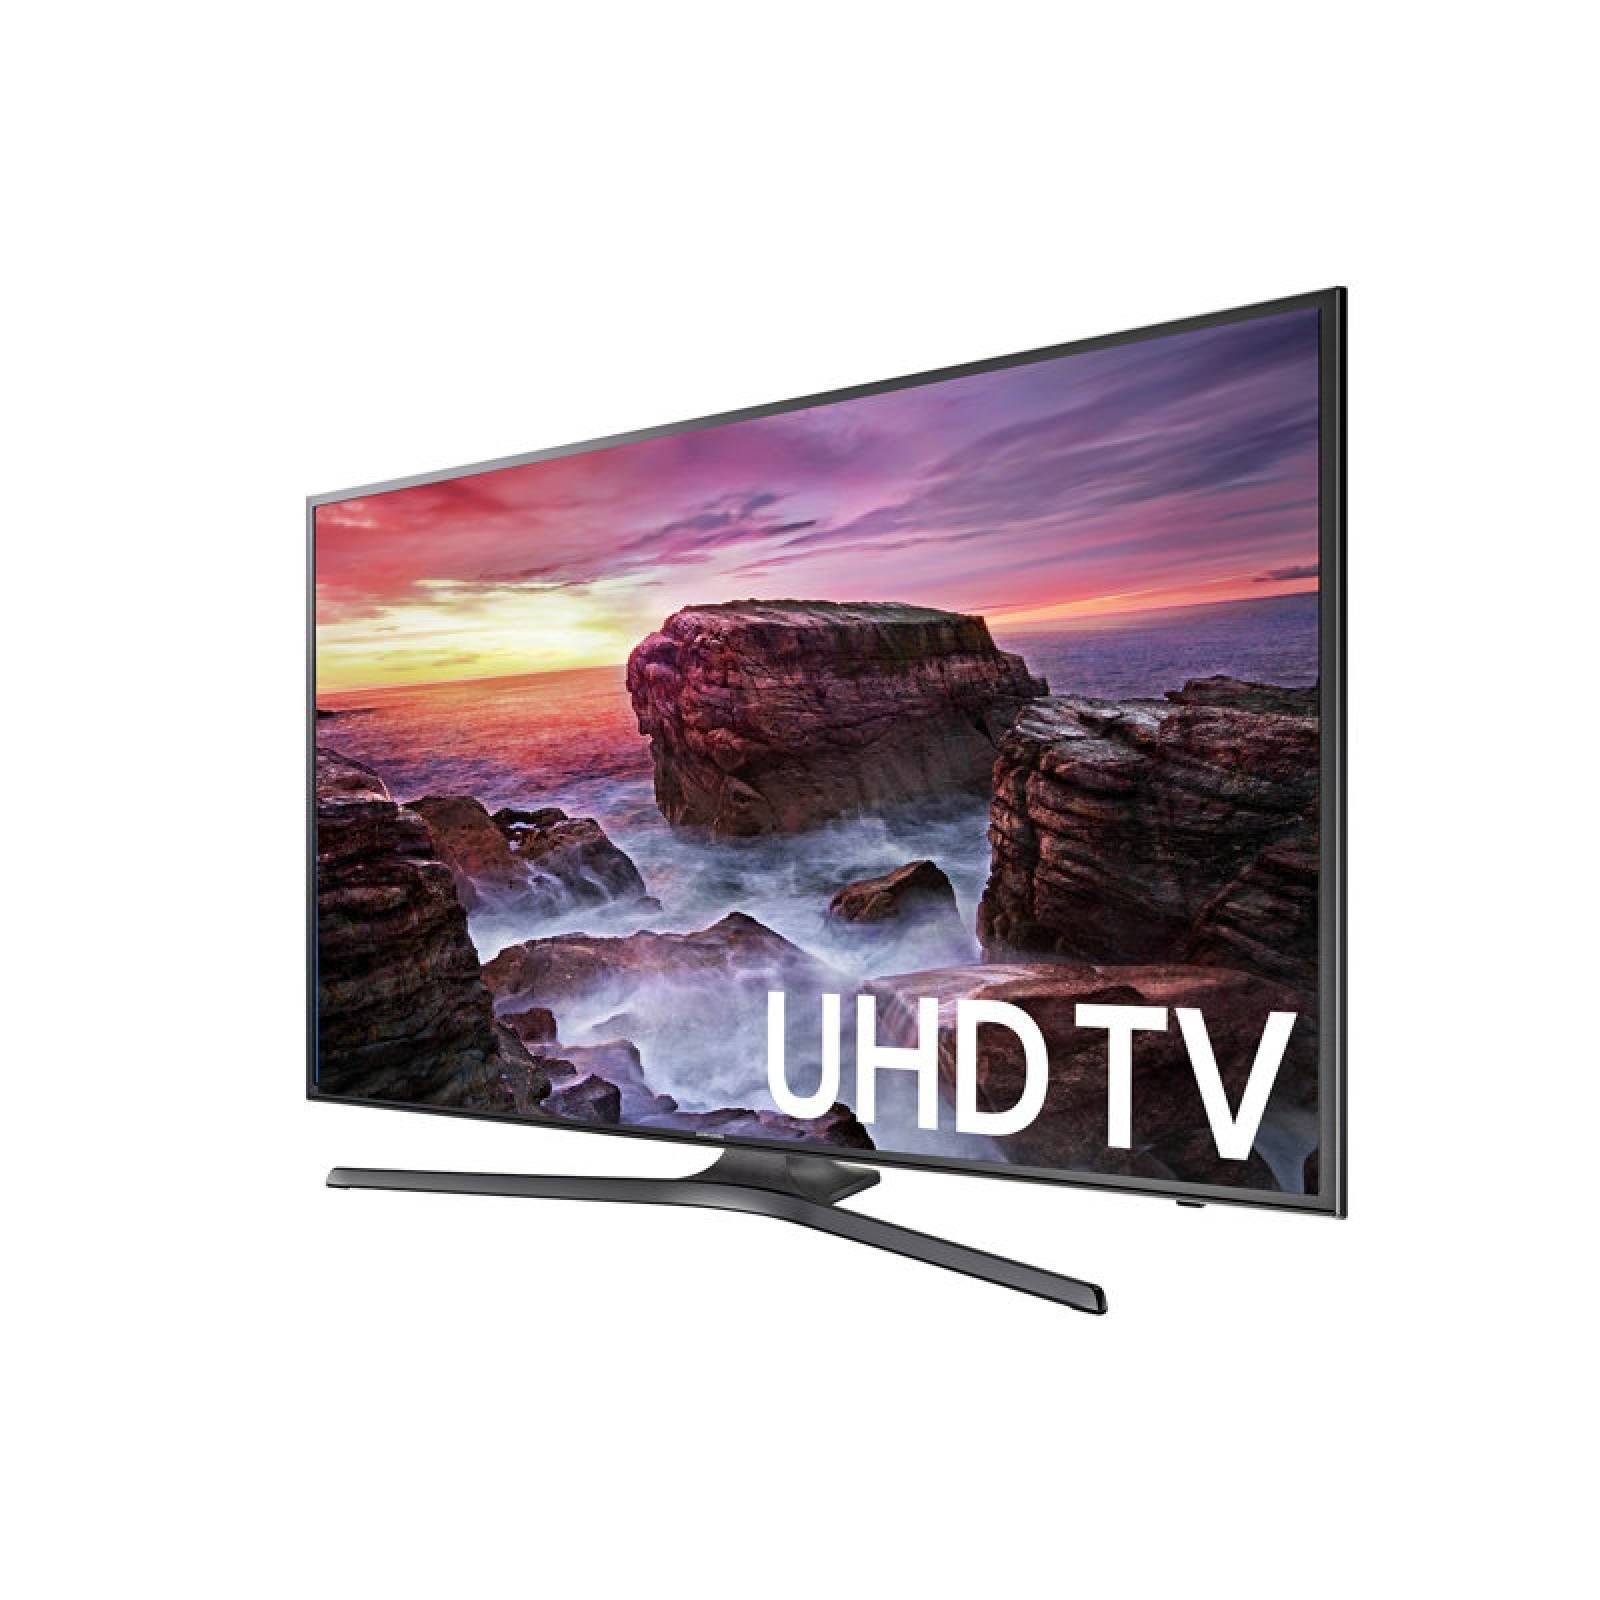 Smart Tv Samsung 65 Pulgadas Led UHD 4K HDMI USB UN65MU6290FXZA - Reacondicionado